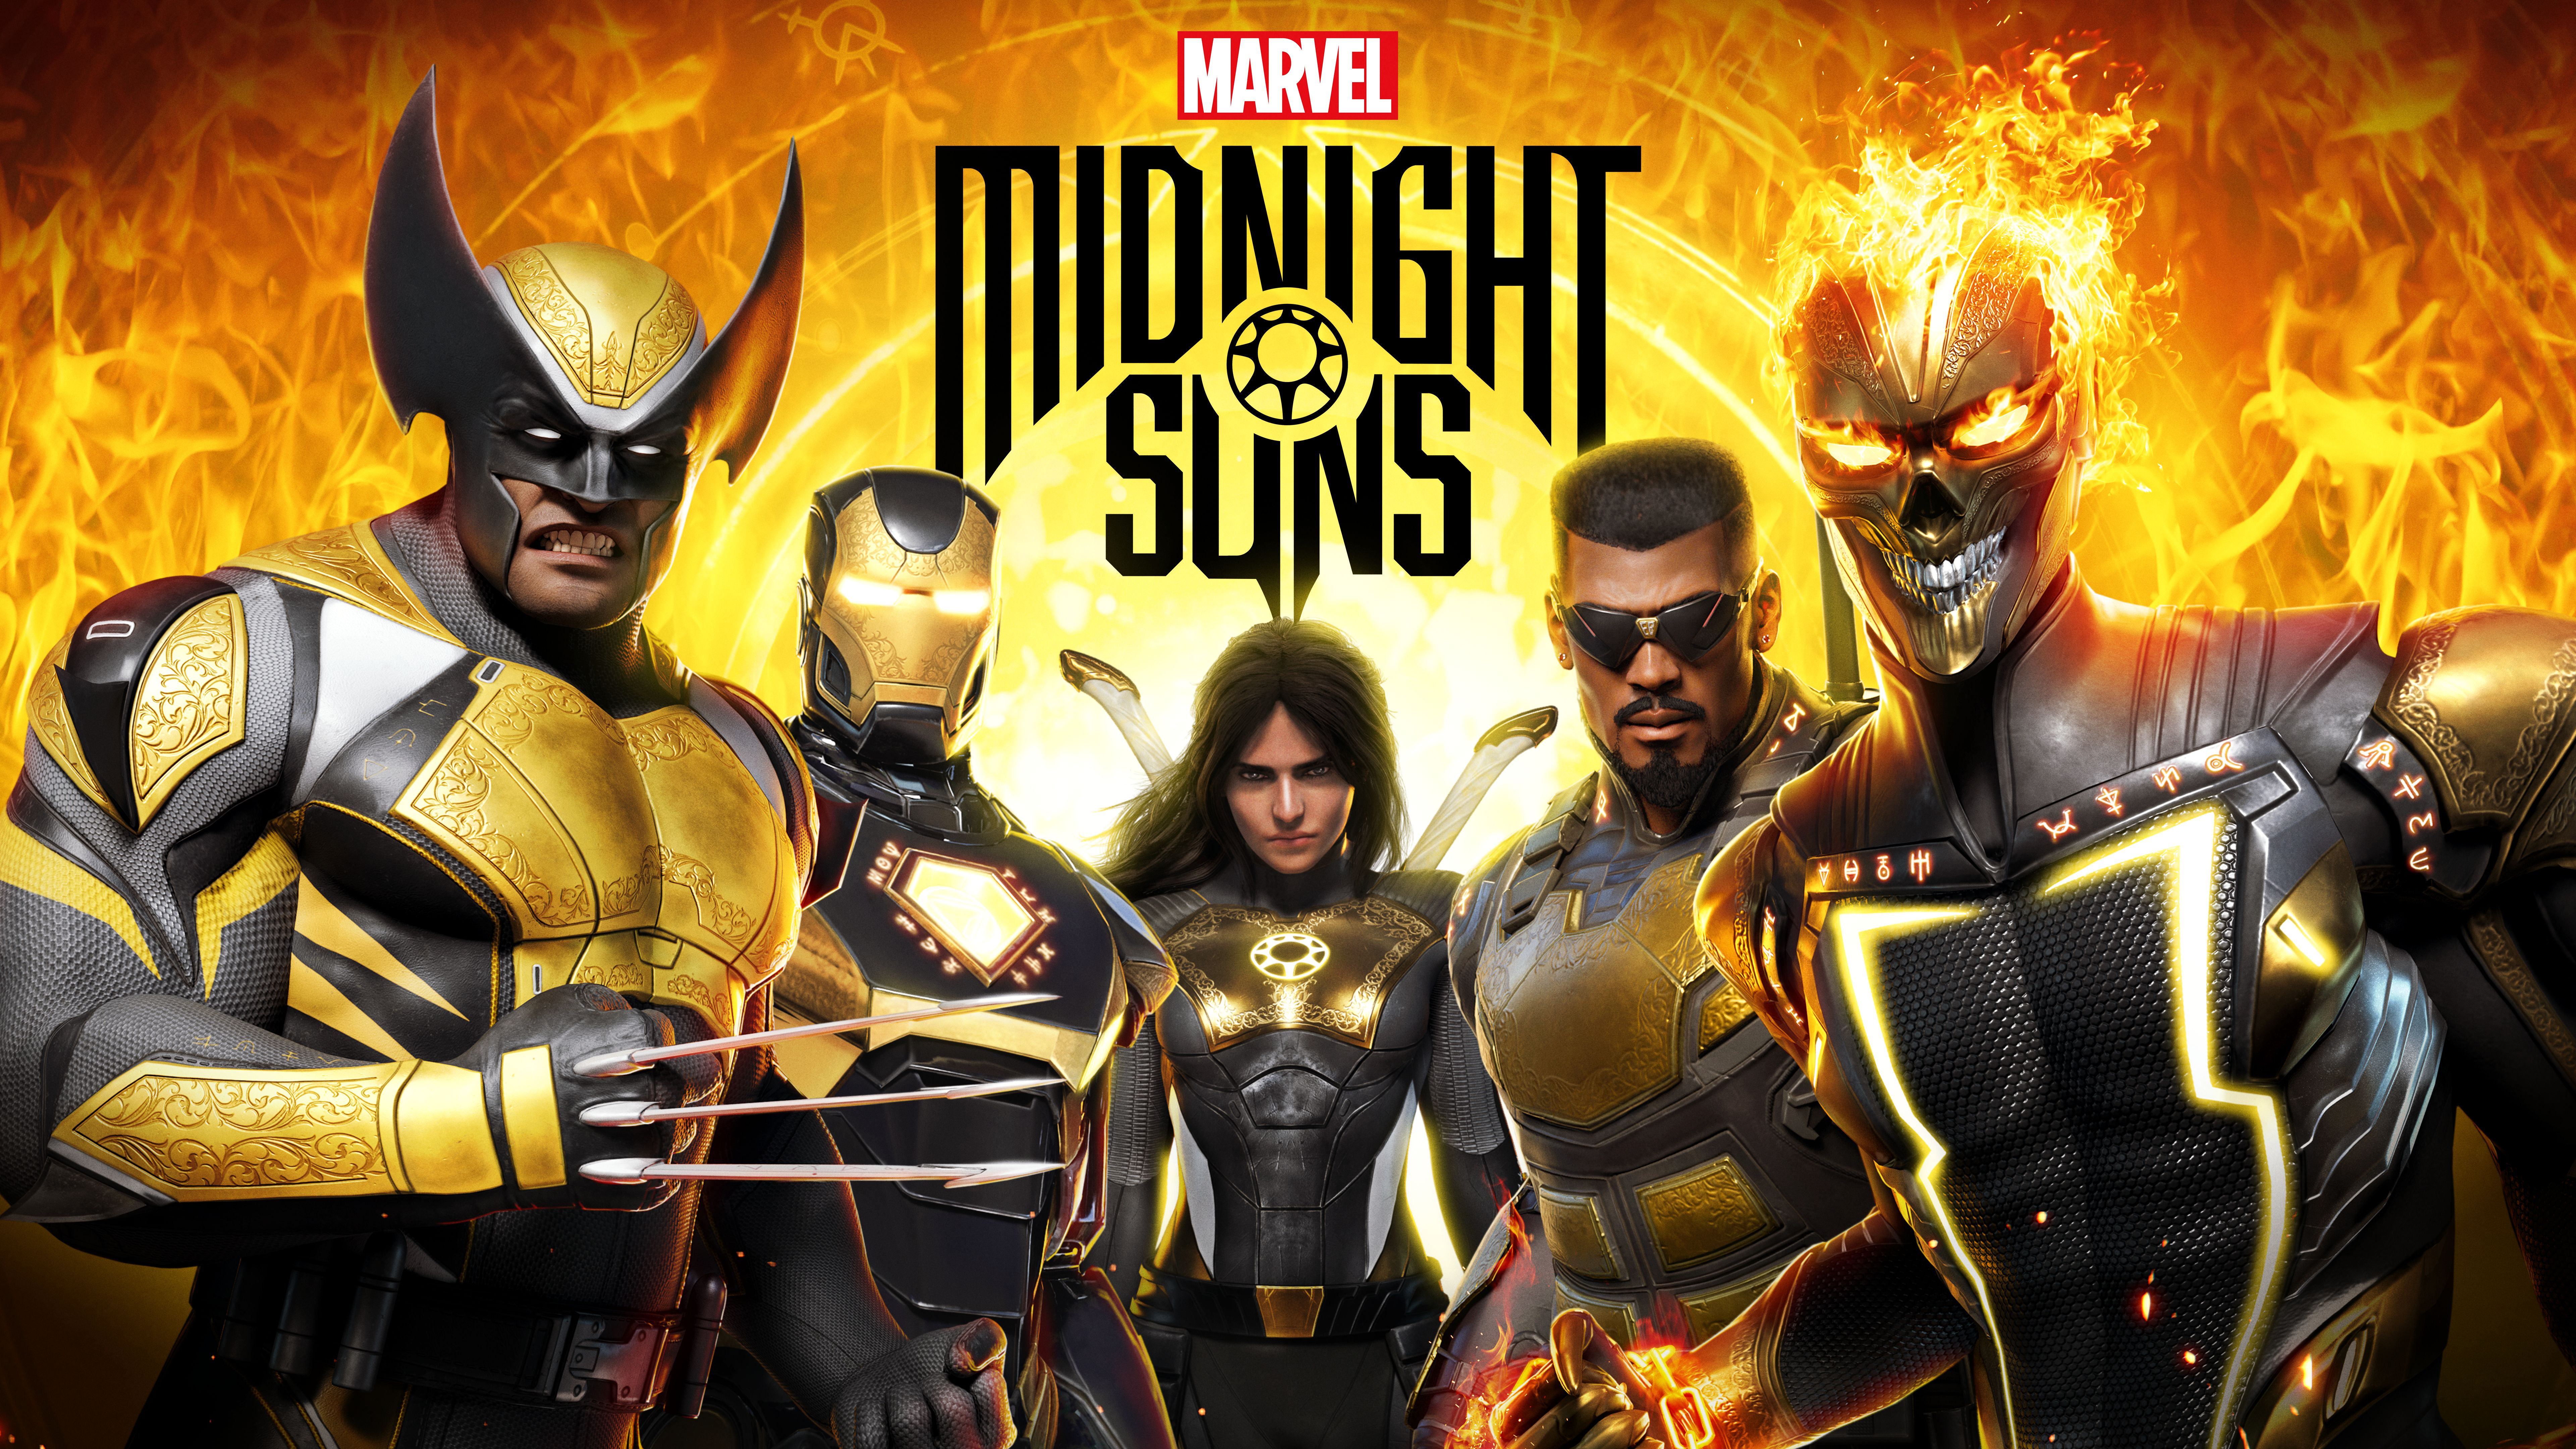 Marvel_s-Midnight-Suns---Key-Art-Horizontal.jpg